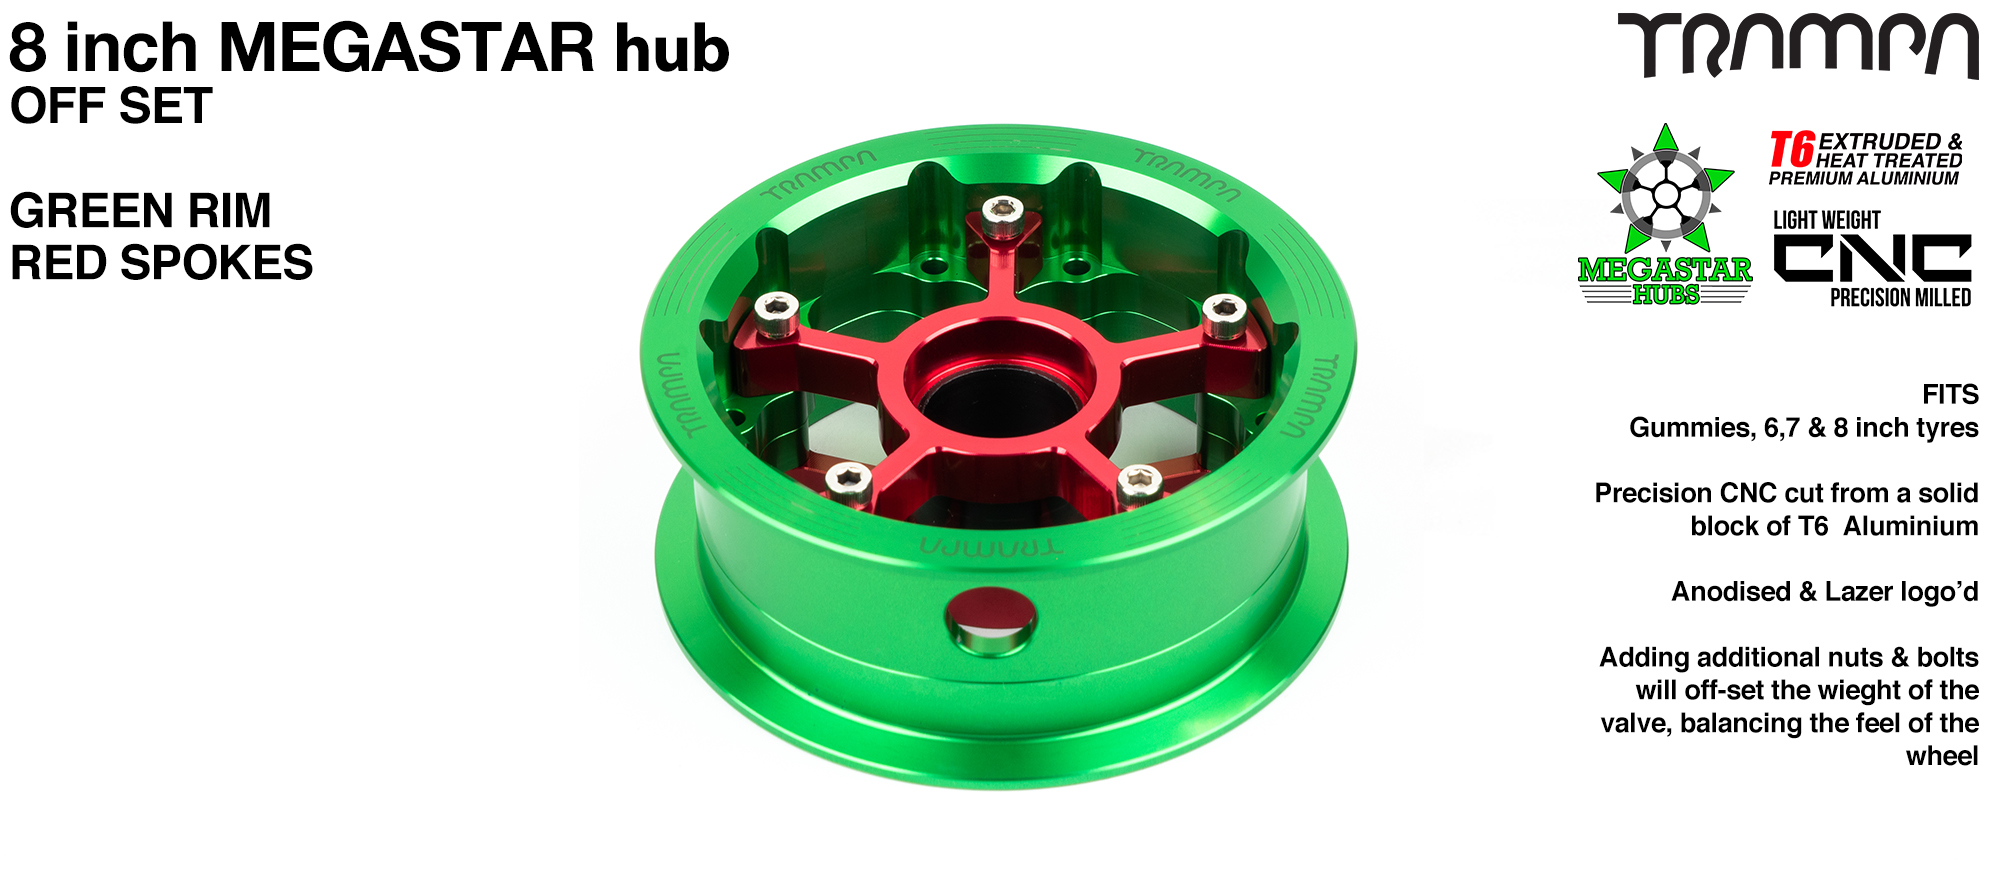 8 Inch OFF-SET MEGASTAR Hub - GREEN Rim with RED Spokes